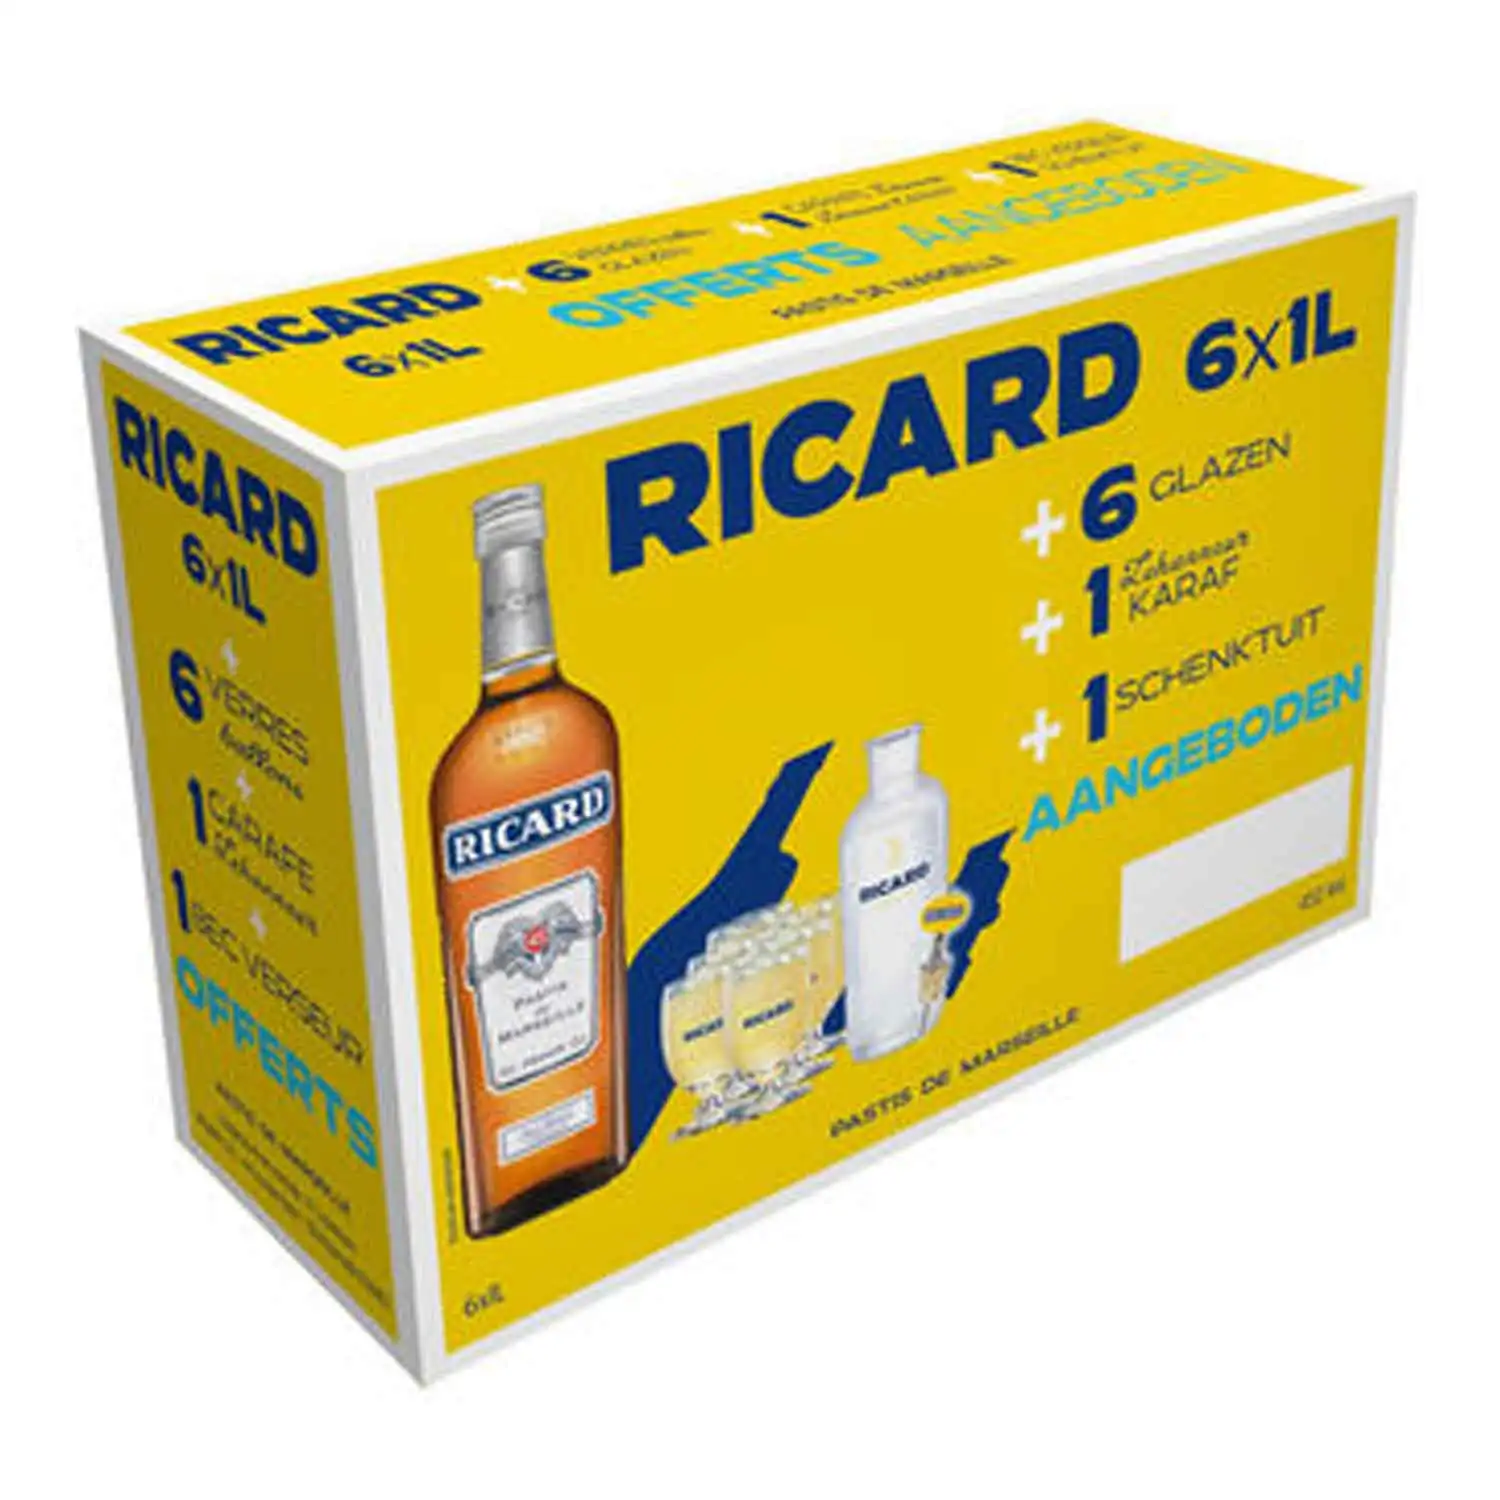 Ricard 6x1l +6 verres +1 carafe +1 drip - Buy at Real Tobacco